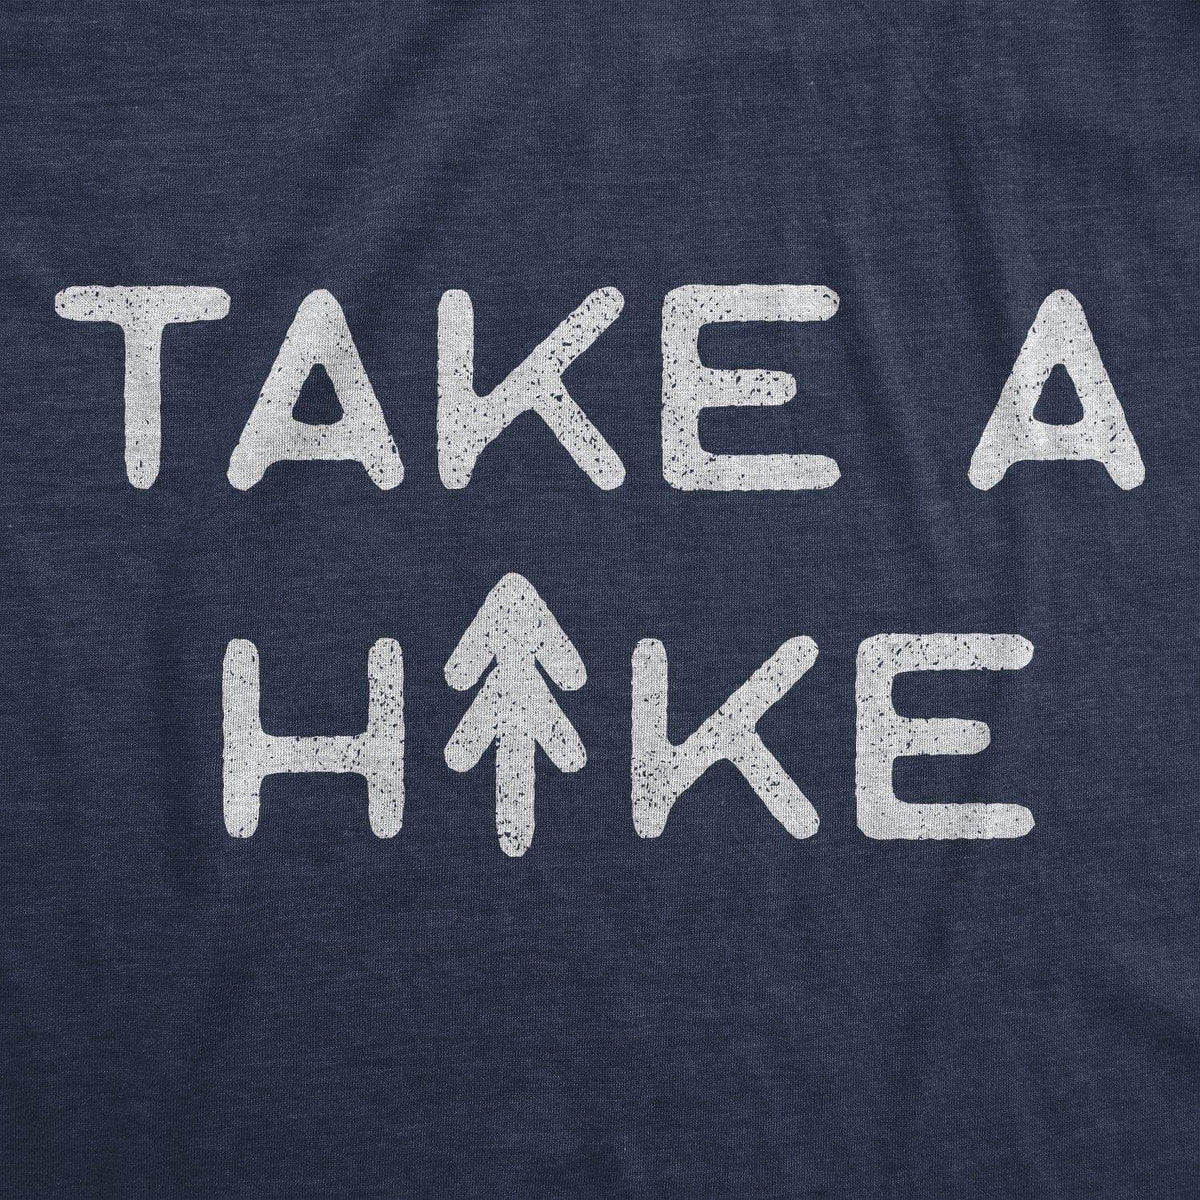 Take A Hike Men&#39;s Tshirt - Crazy Dog T-Shirts